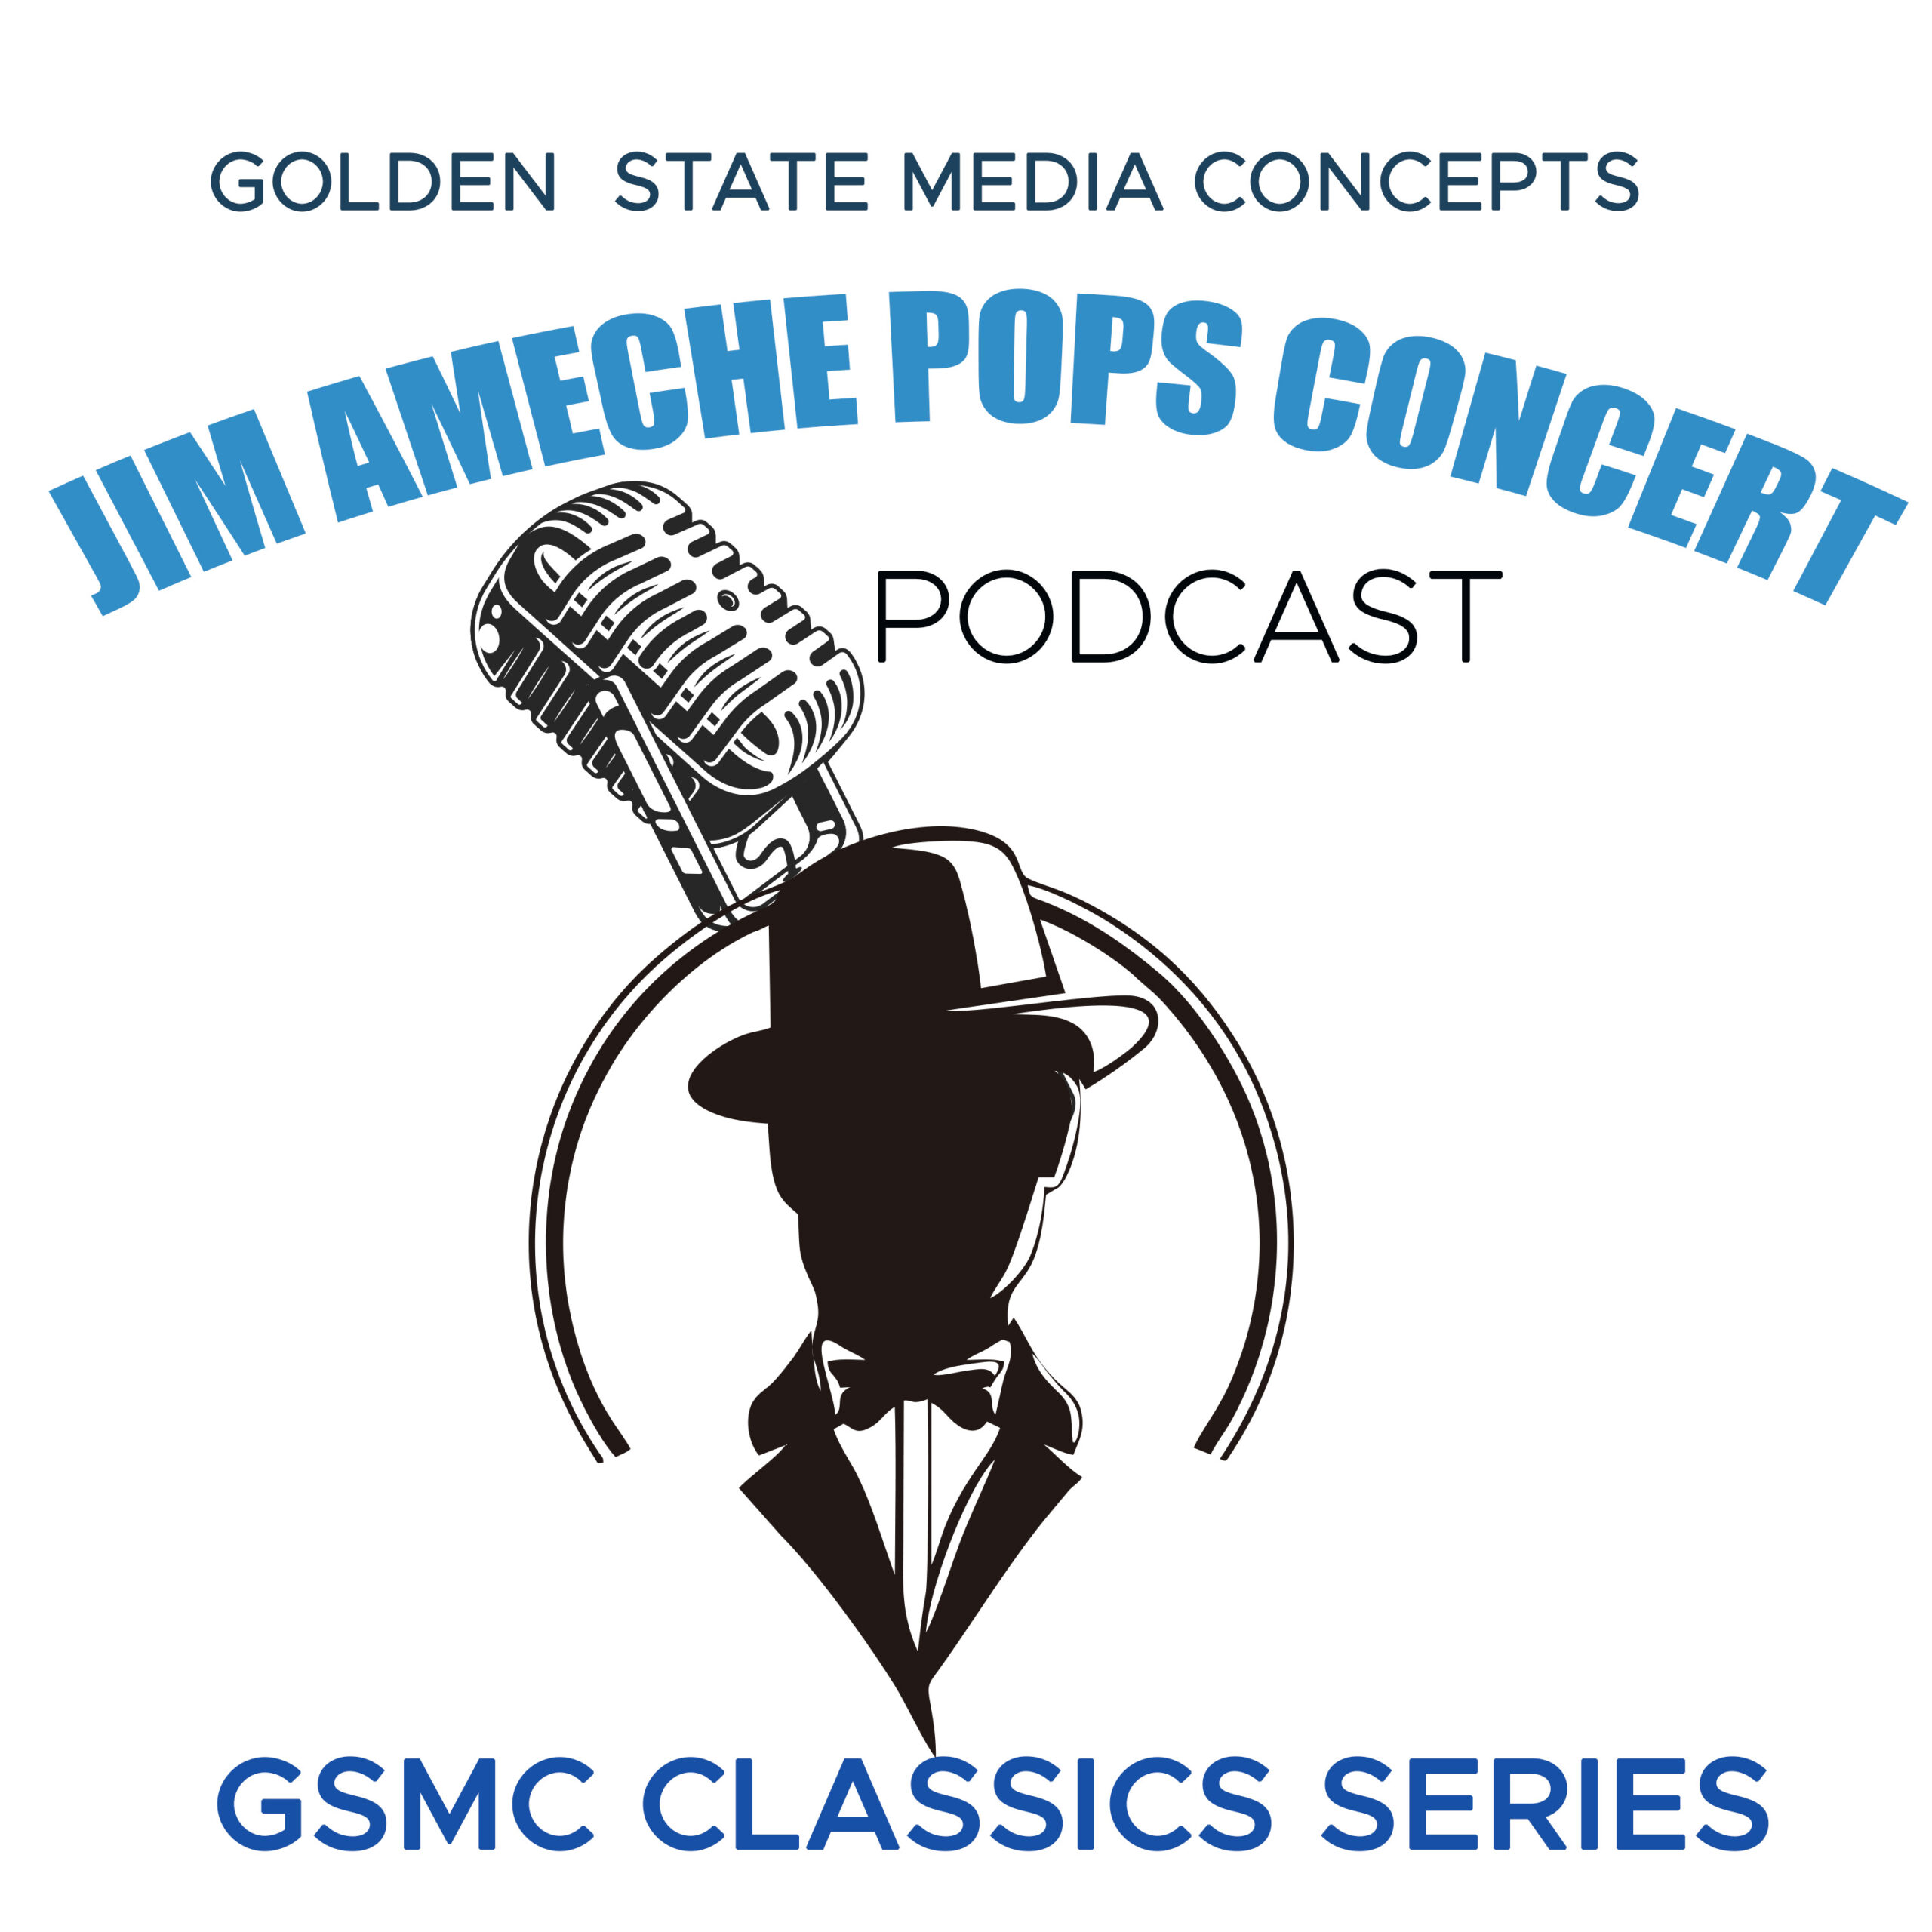 Jim Ameche Pops Concert